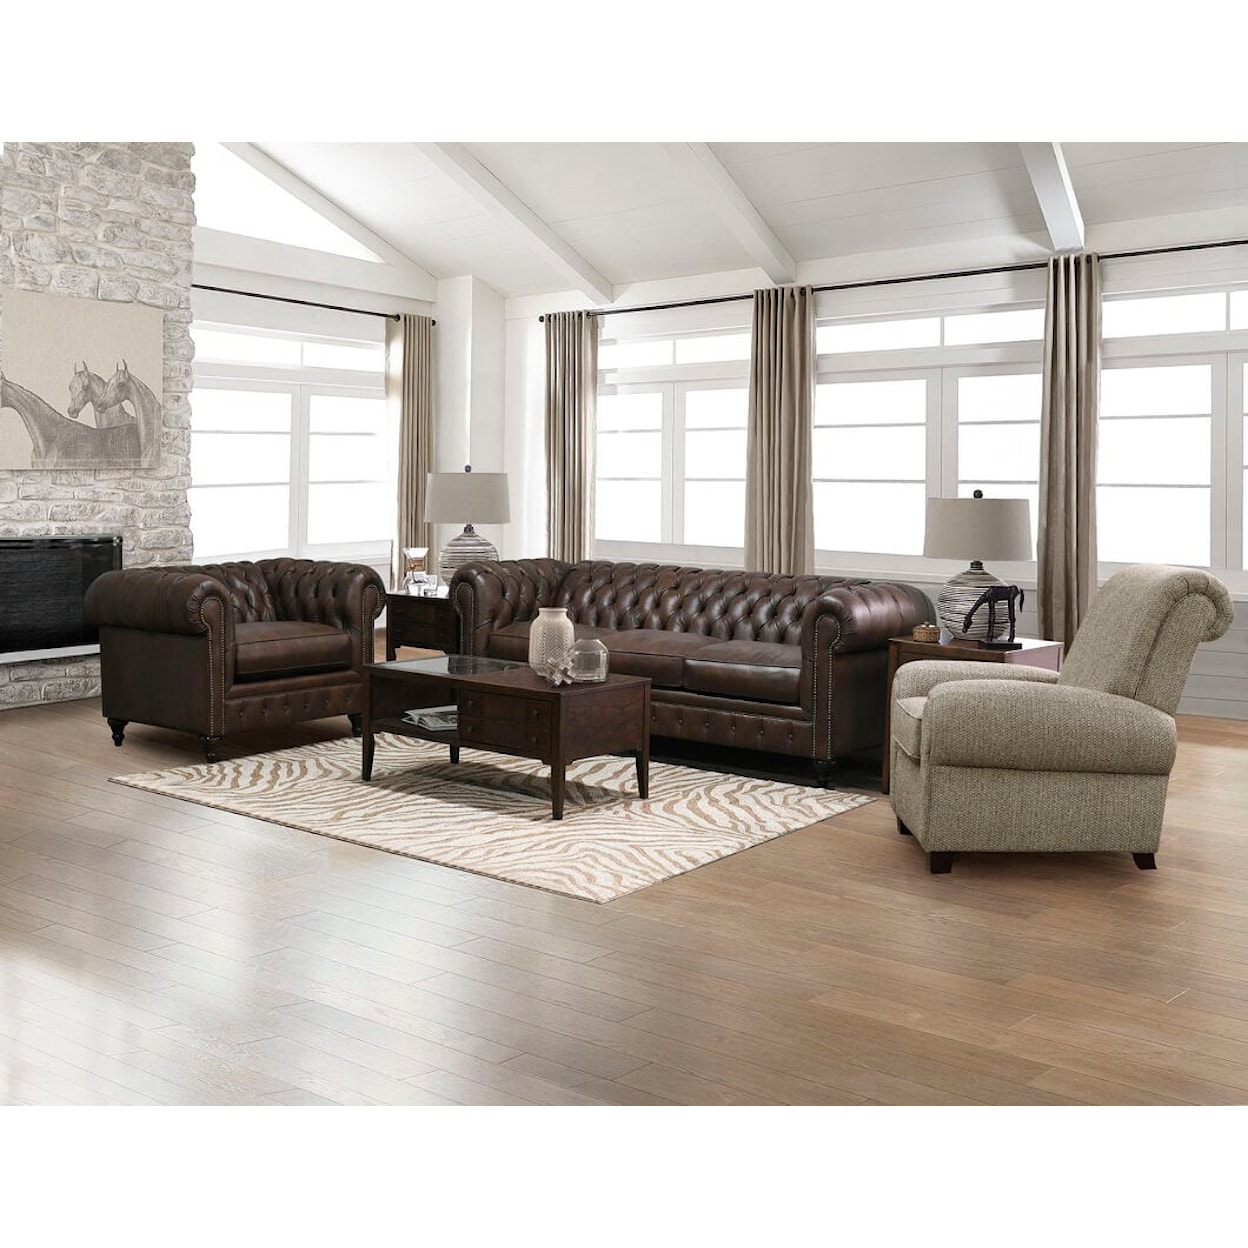 Dimensions 2R00/AL Series Sofa